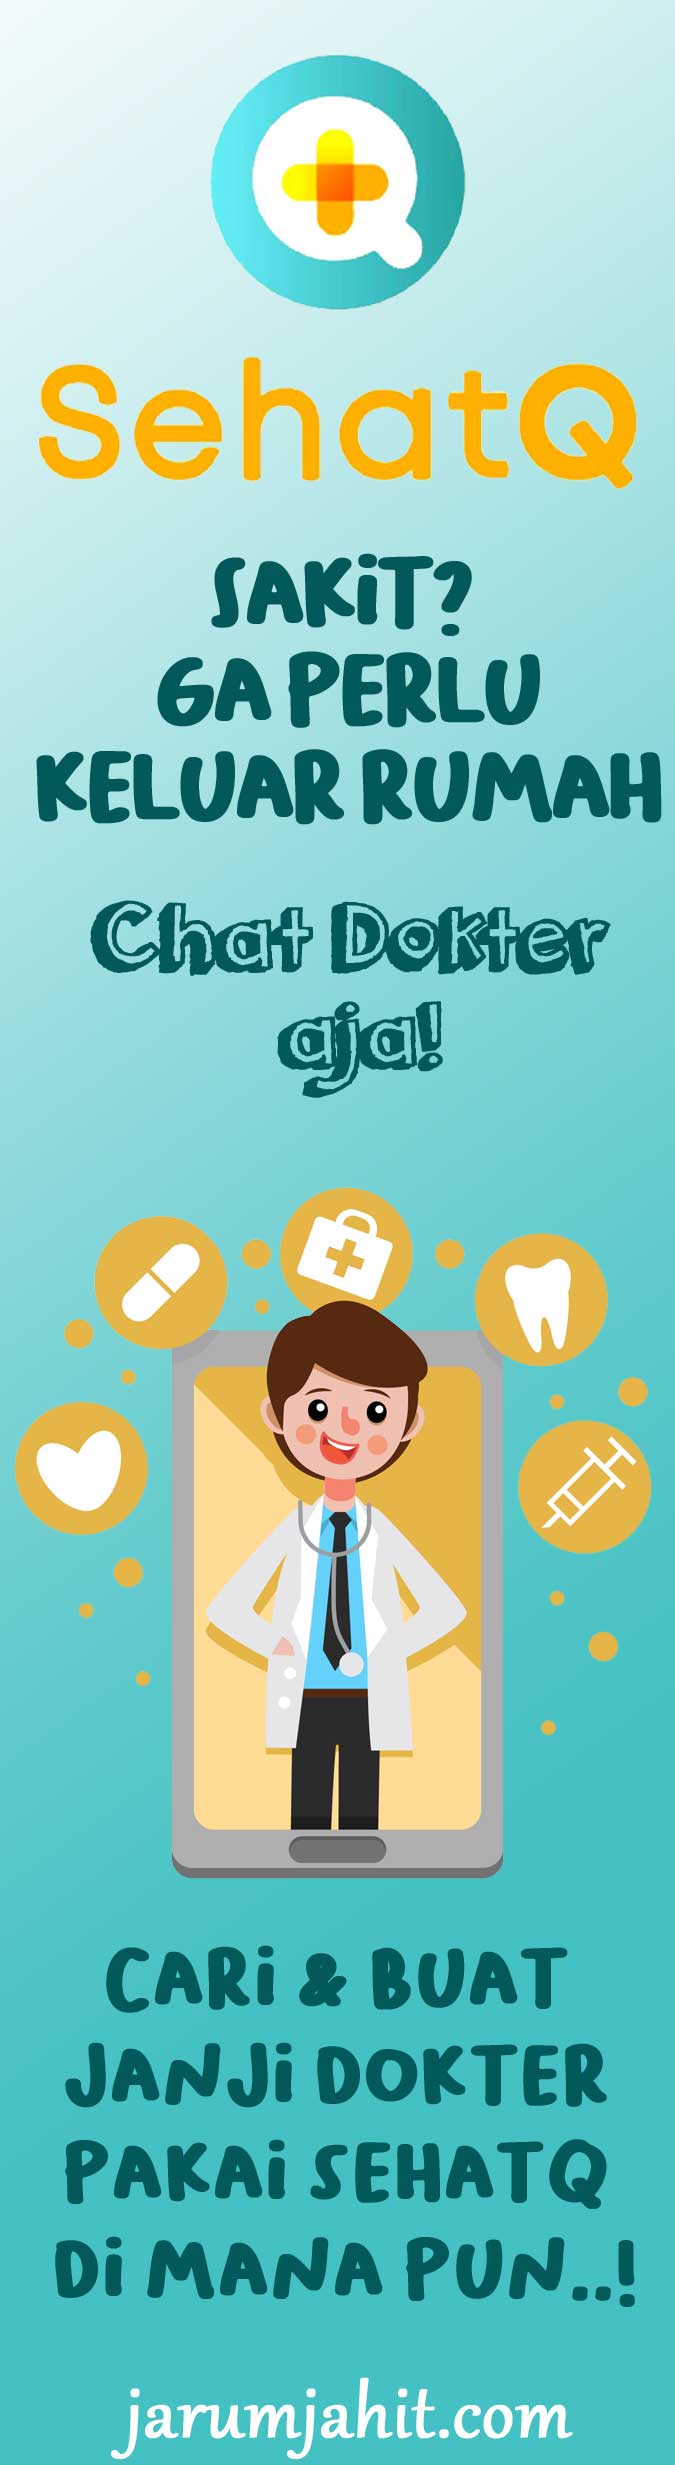 Chat Dokter SehatQ.com